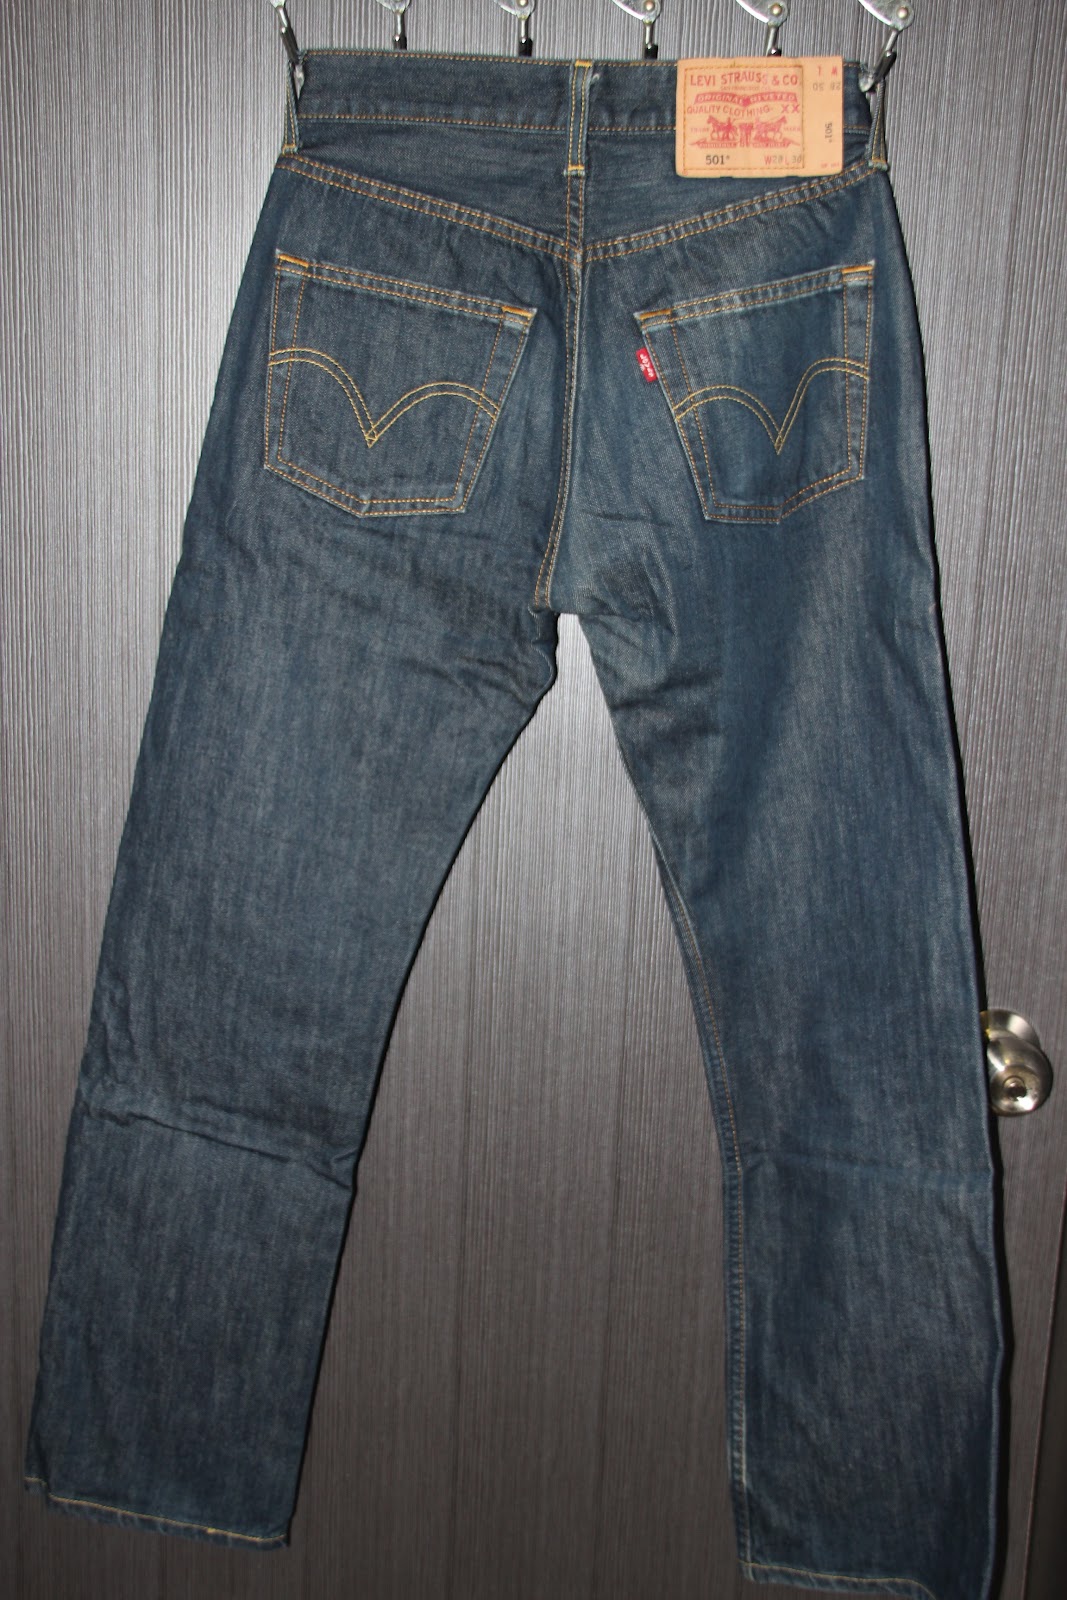 Hipster Closet: Levi's 501 Jeans - RM185